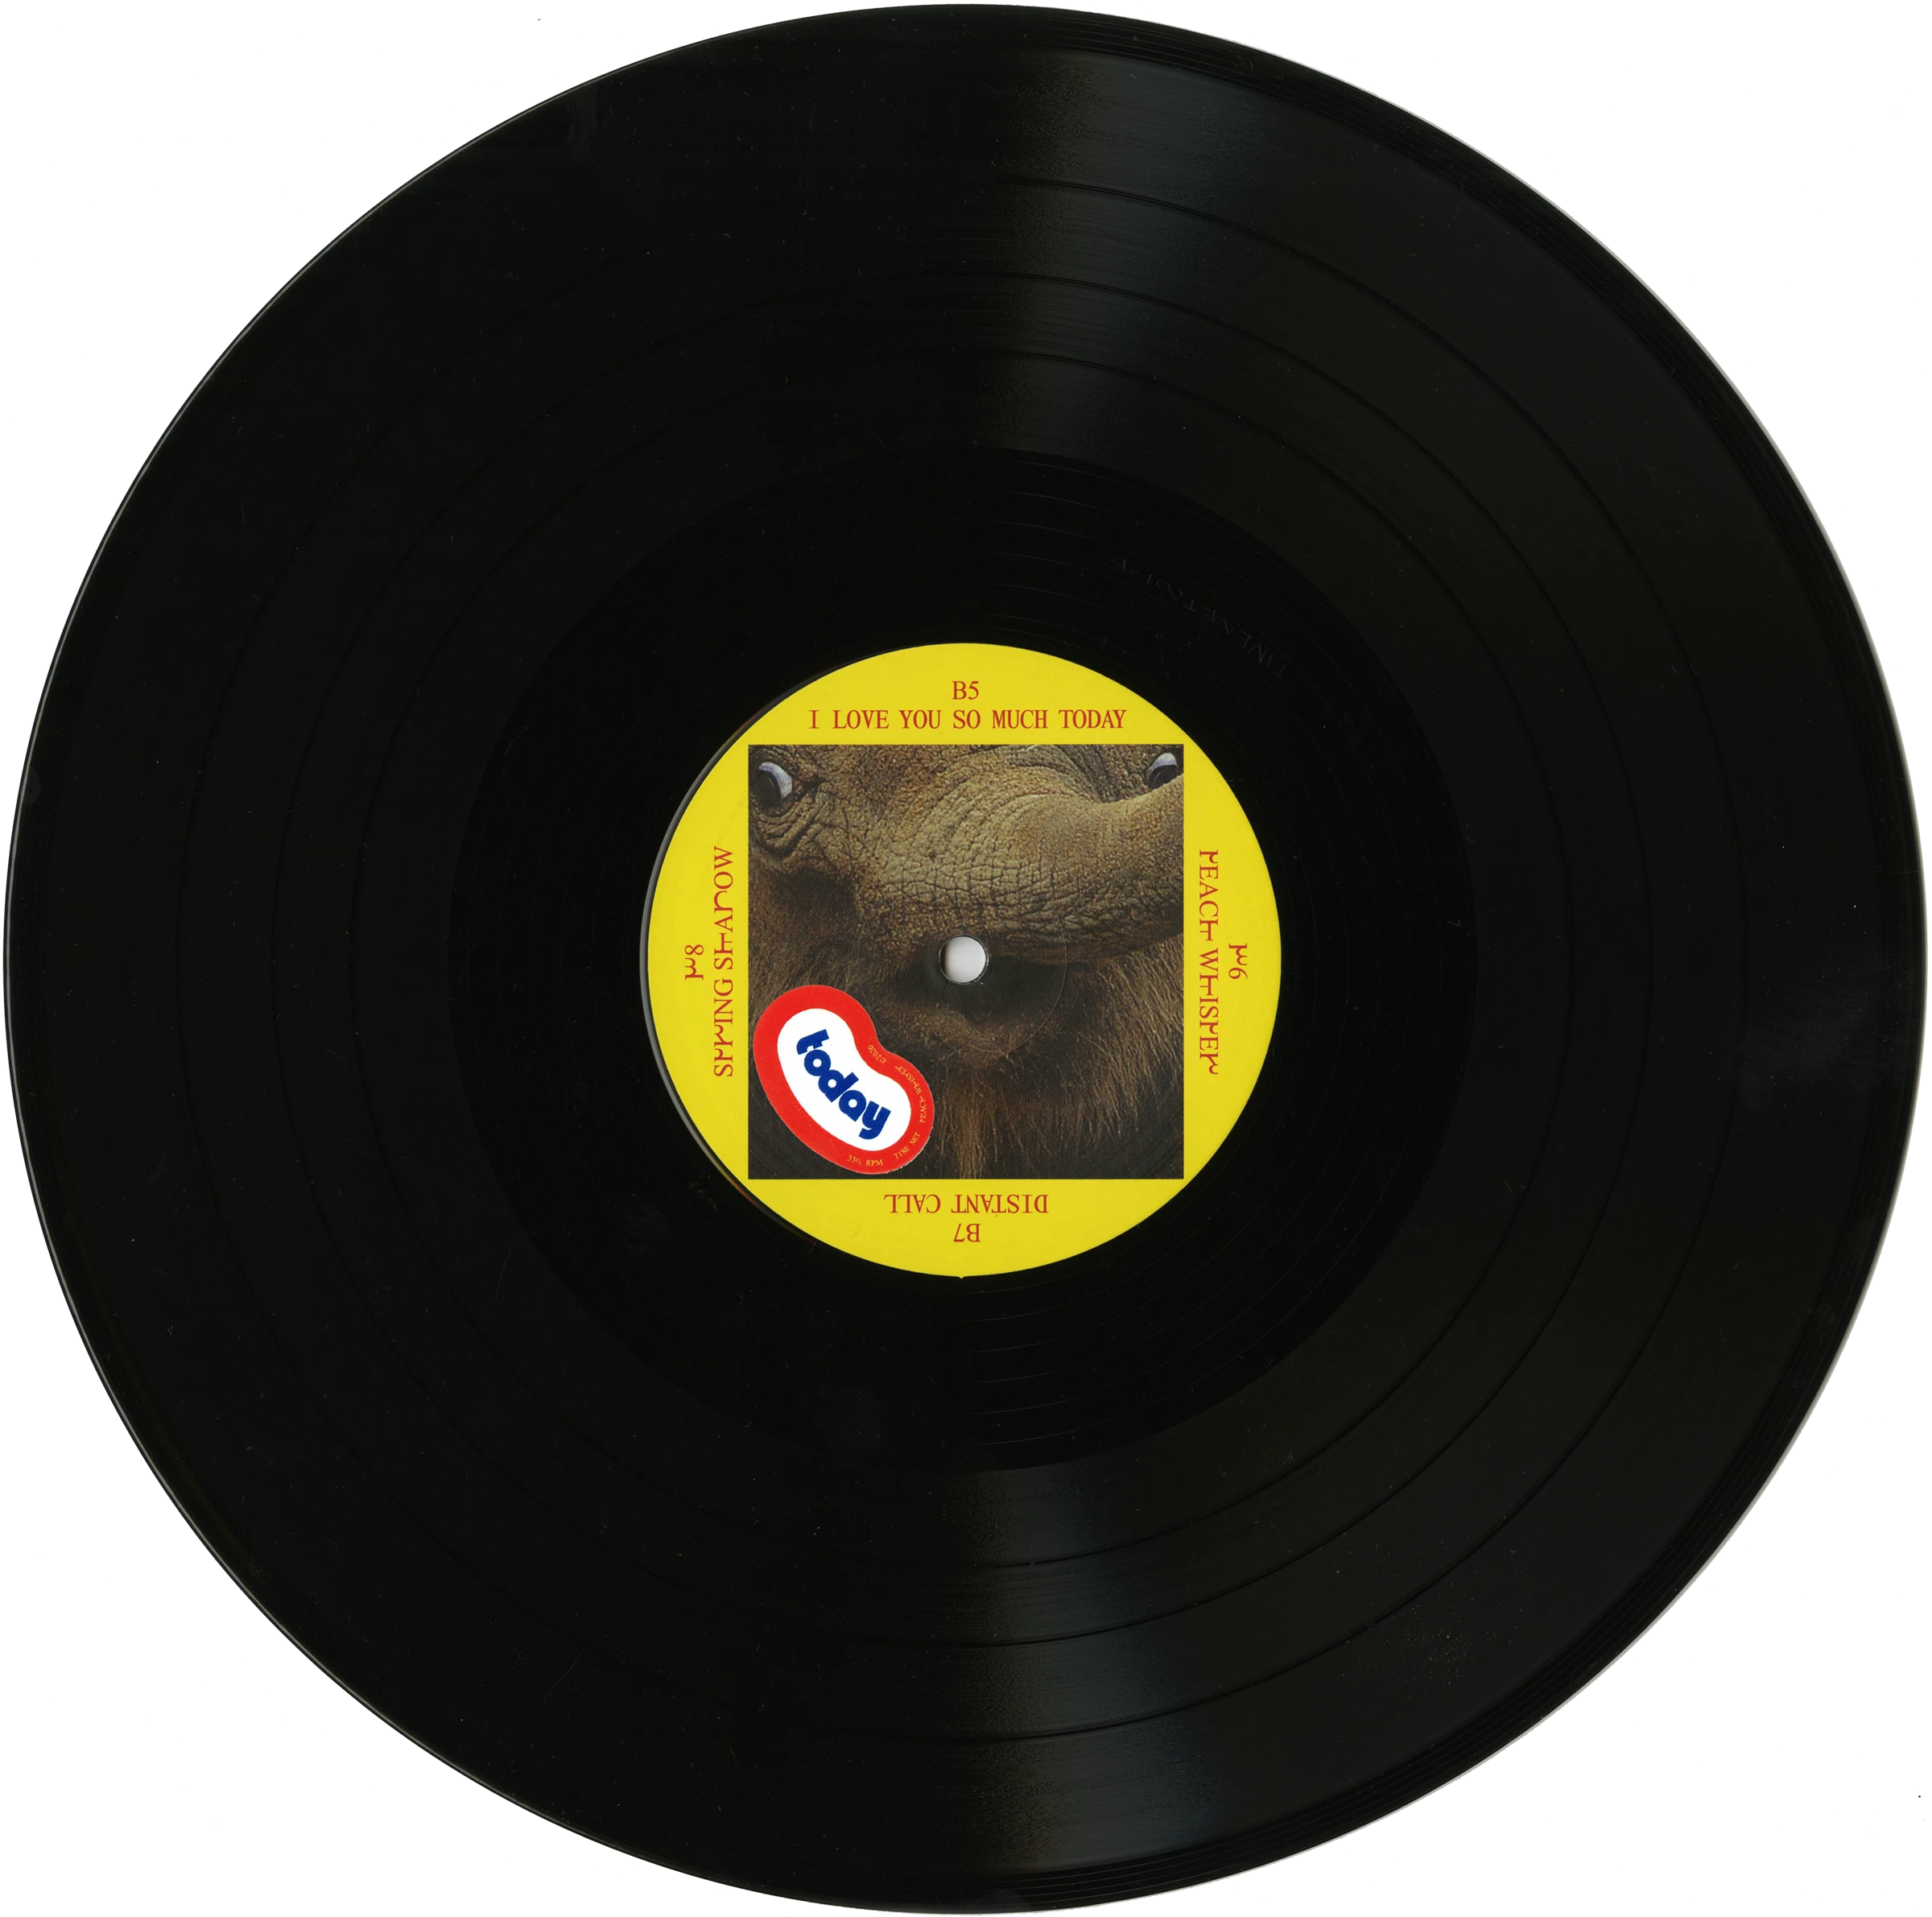 Vinyl record label design